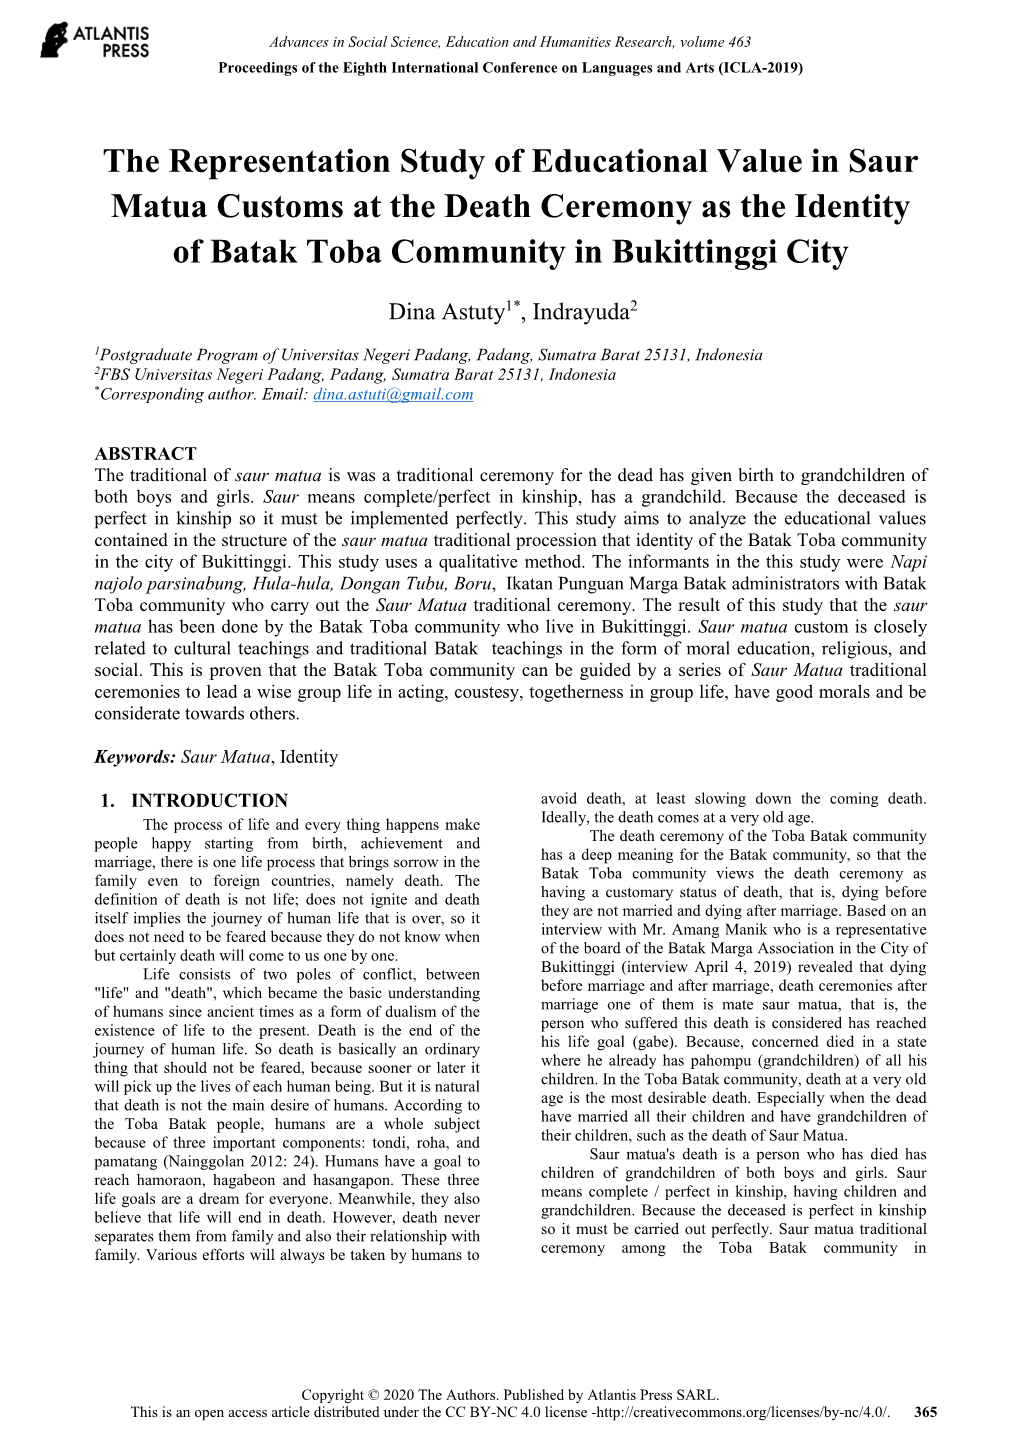 The Representation Study of Educational Value in Saur Matua Customs at the Death Ceremony As the Identity of Batak Toba Community in Bukittinggi City